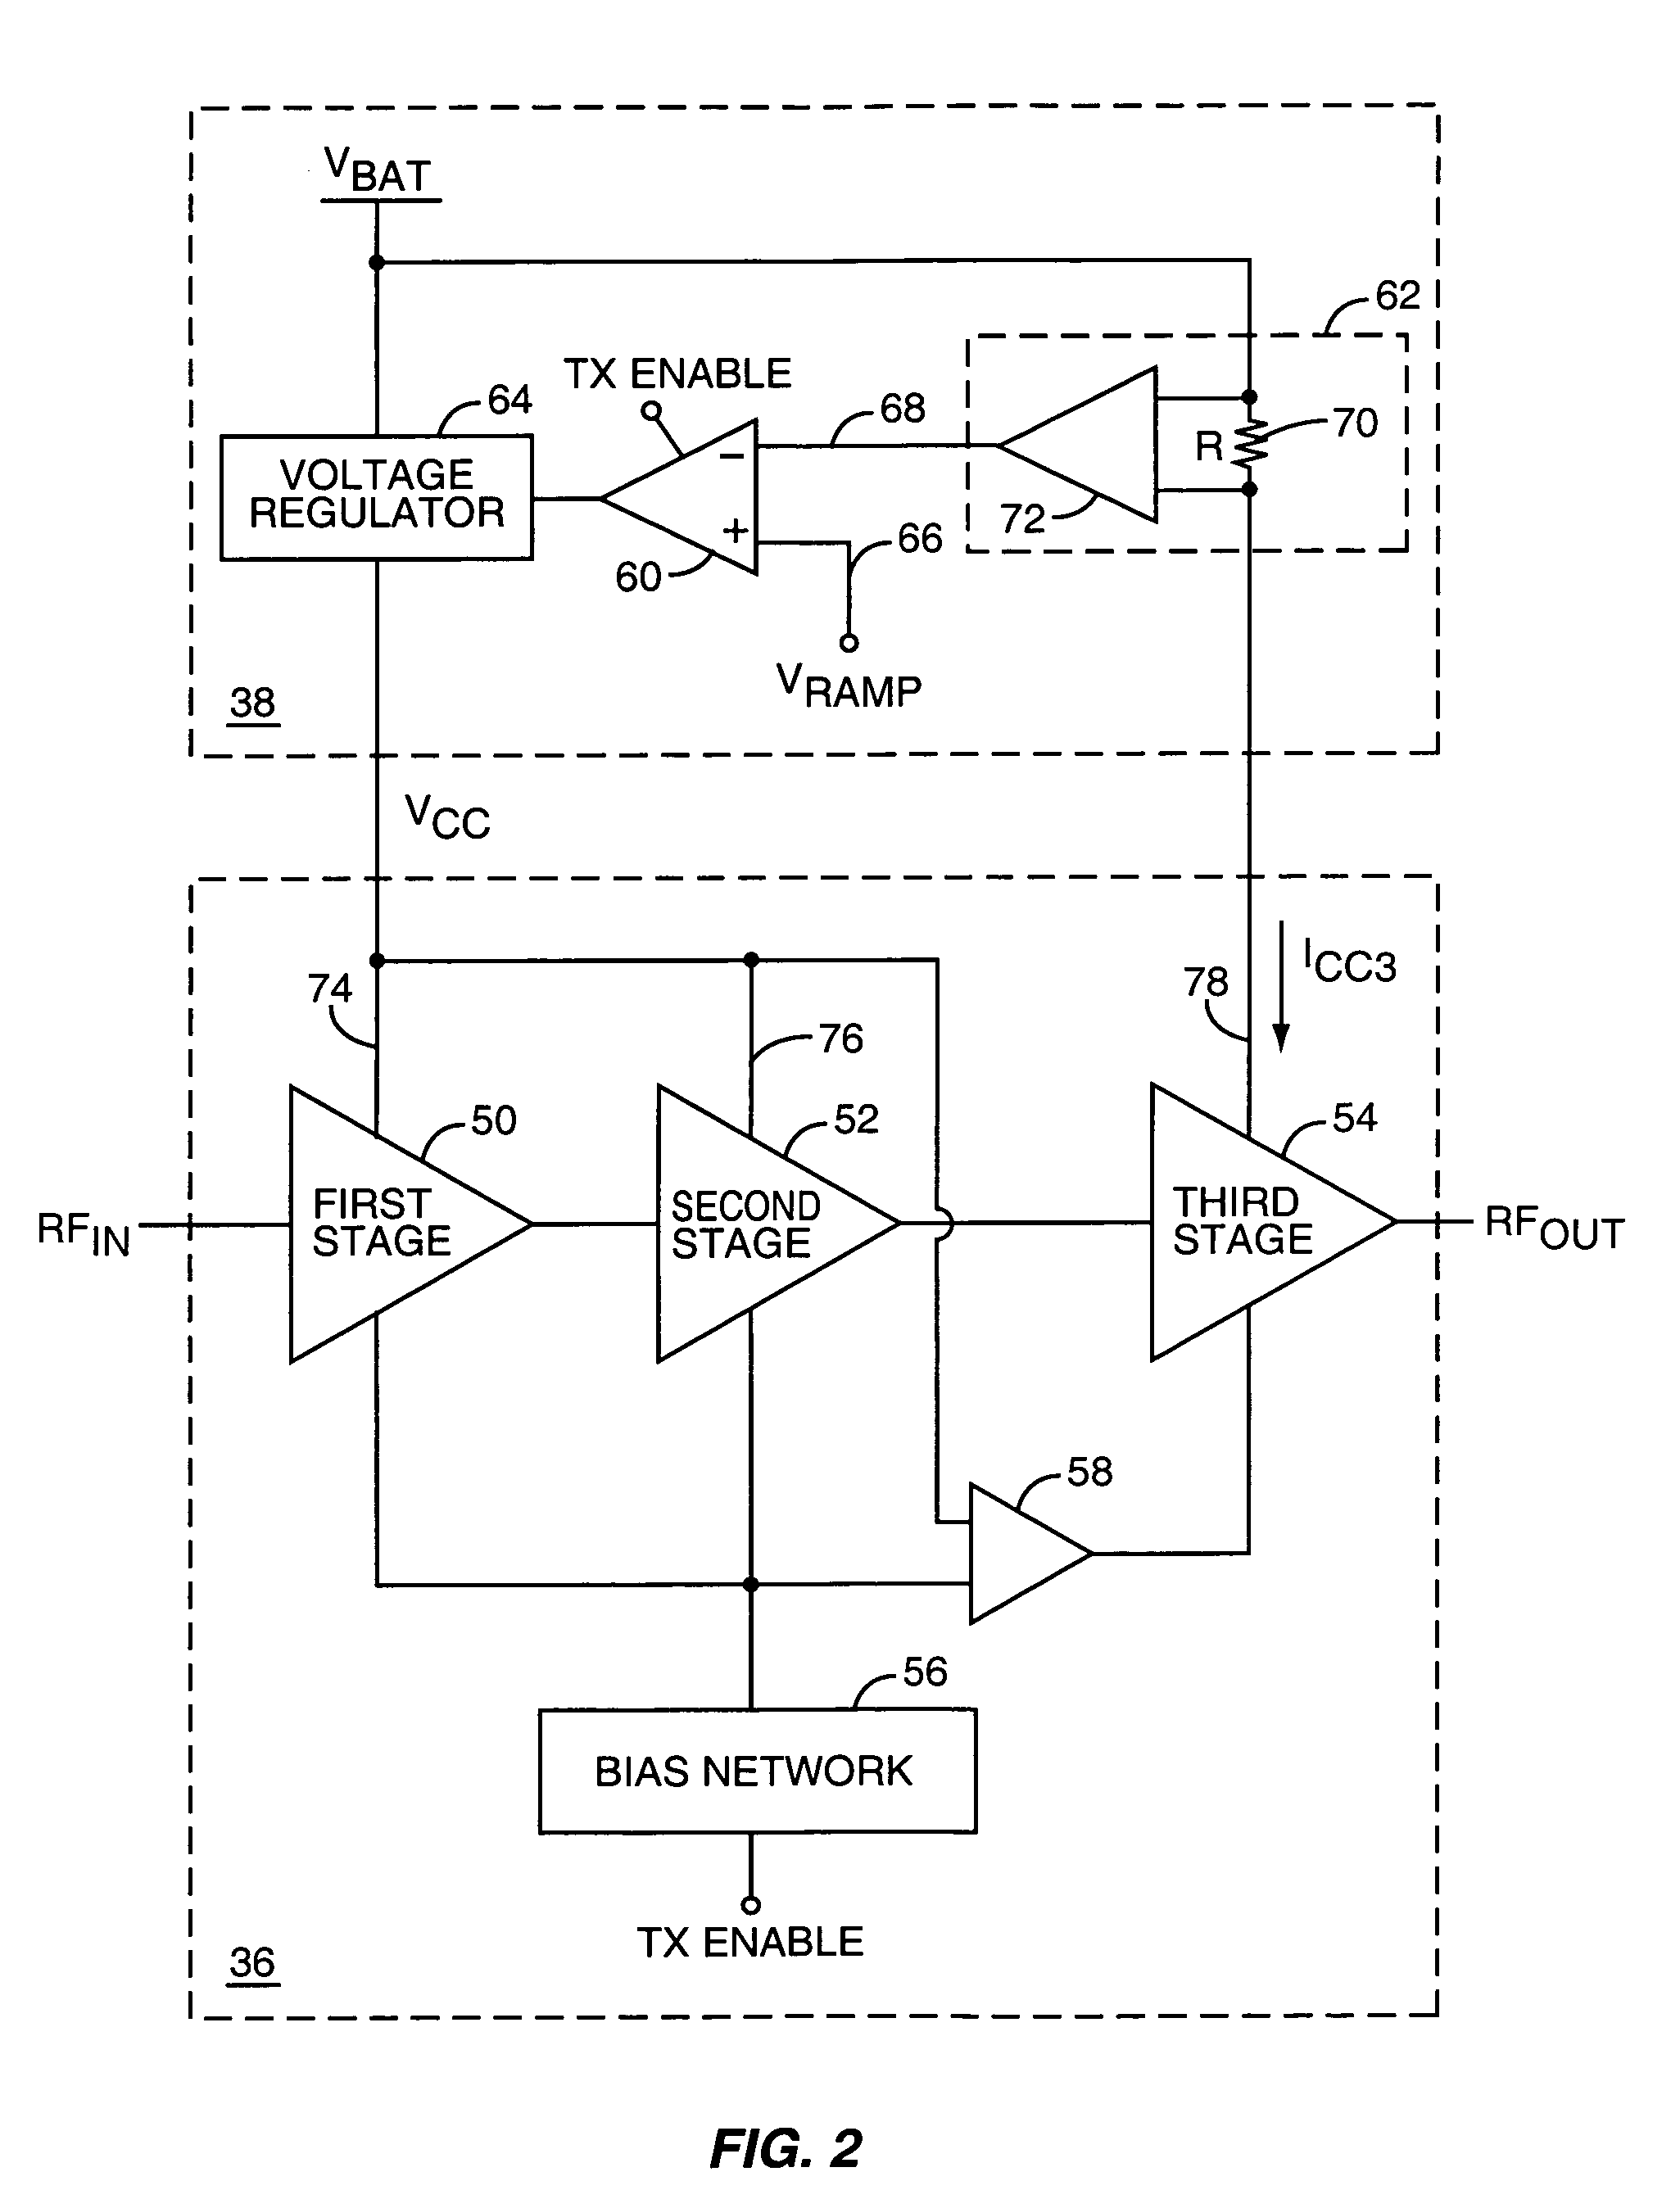 Power amplifier control technique for enhanced efficiency